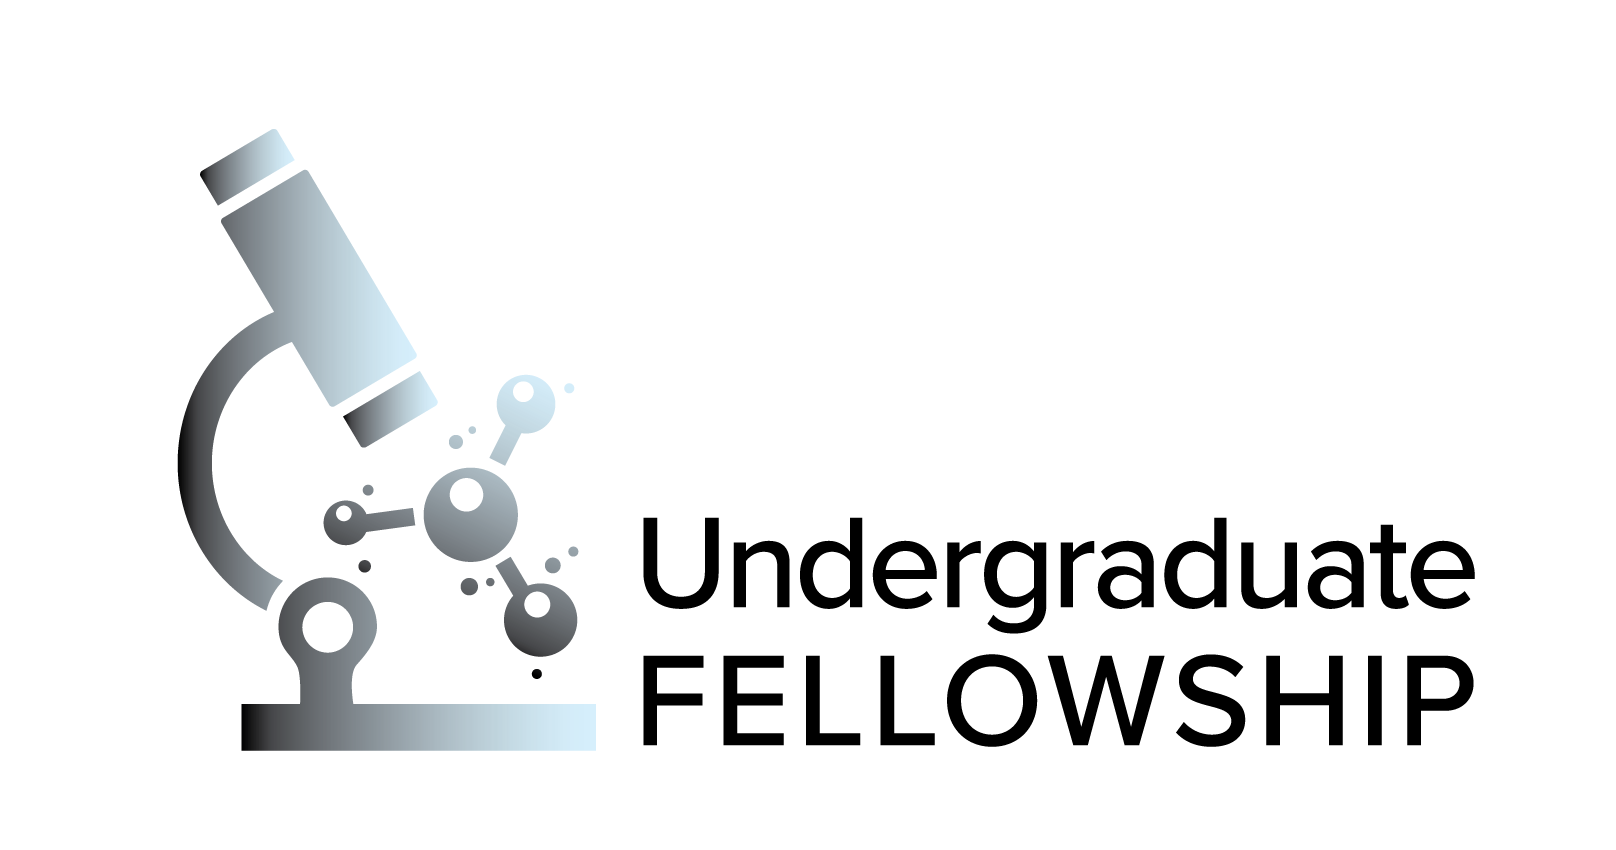 MRI's Undergraduate Fellowship Program